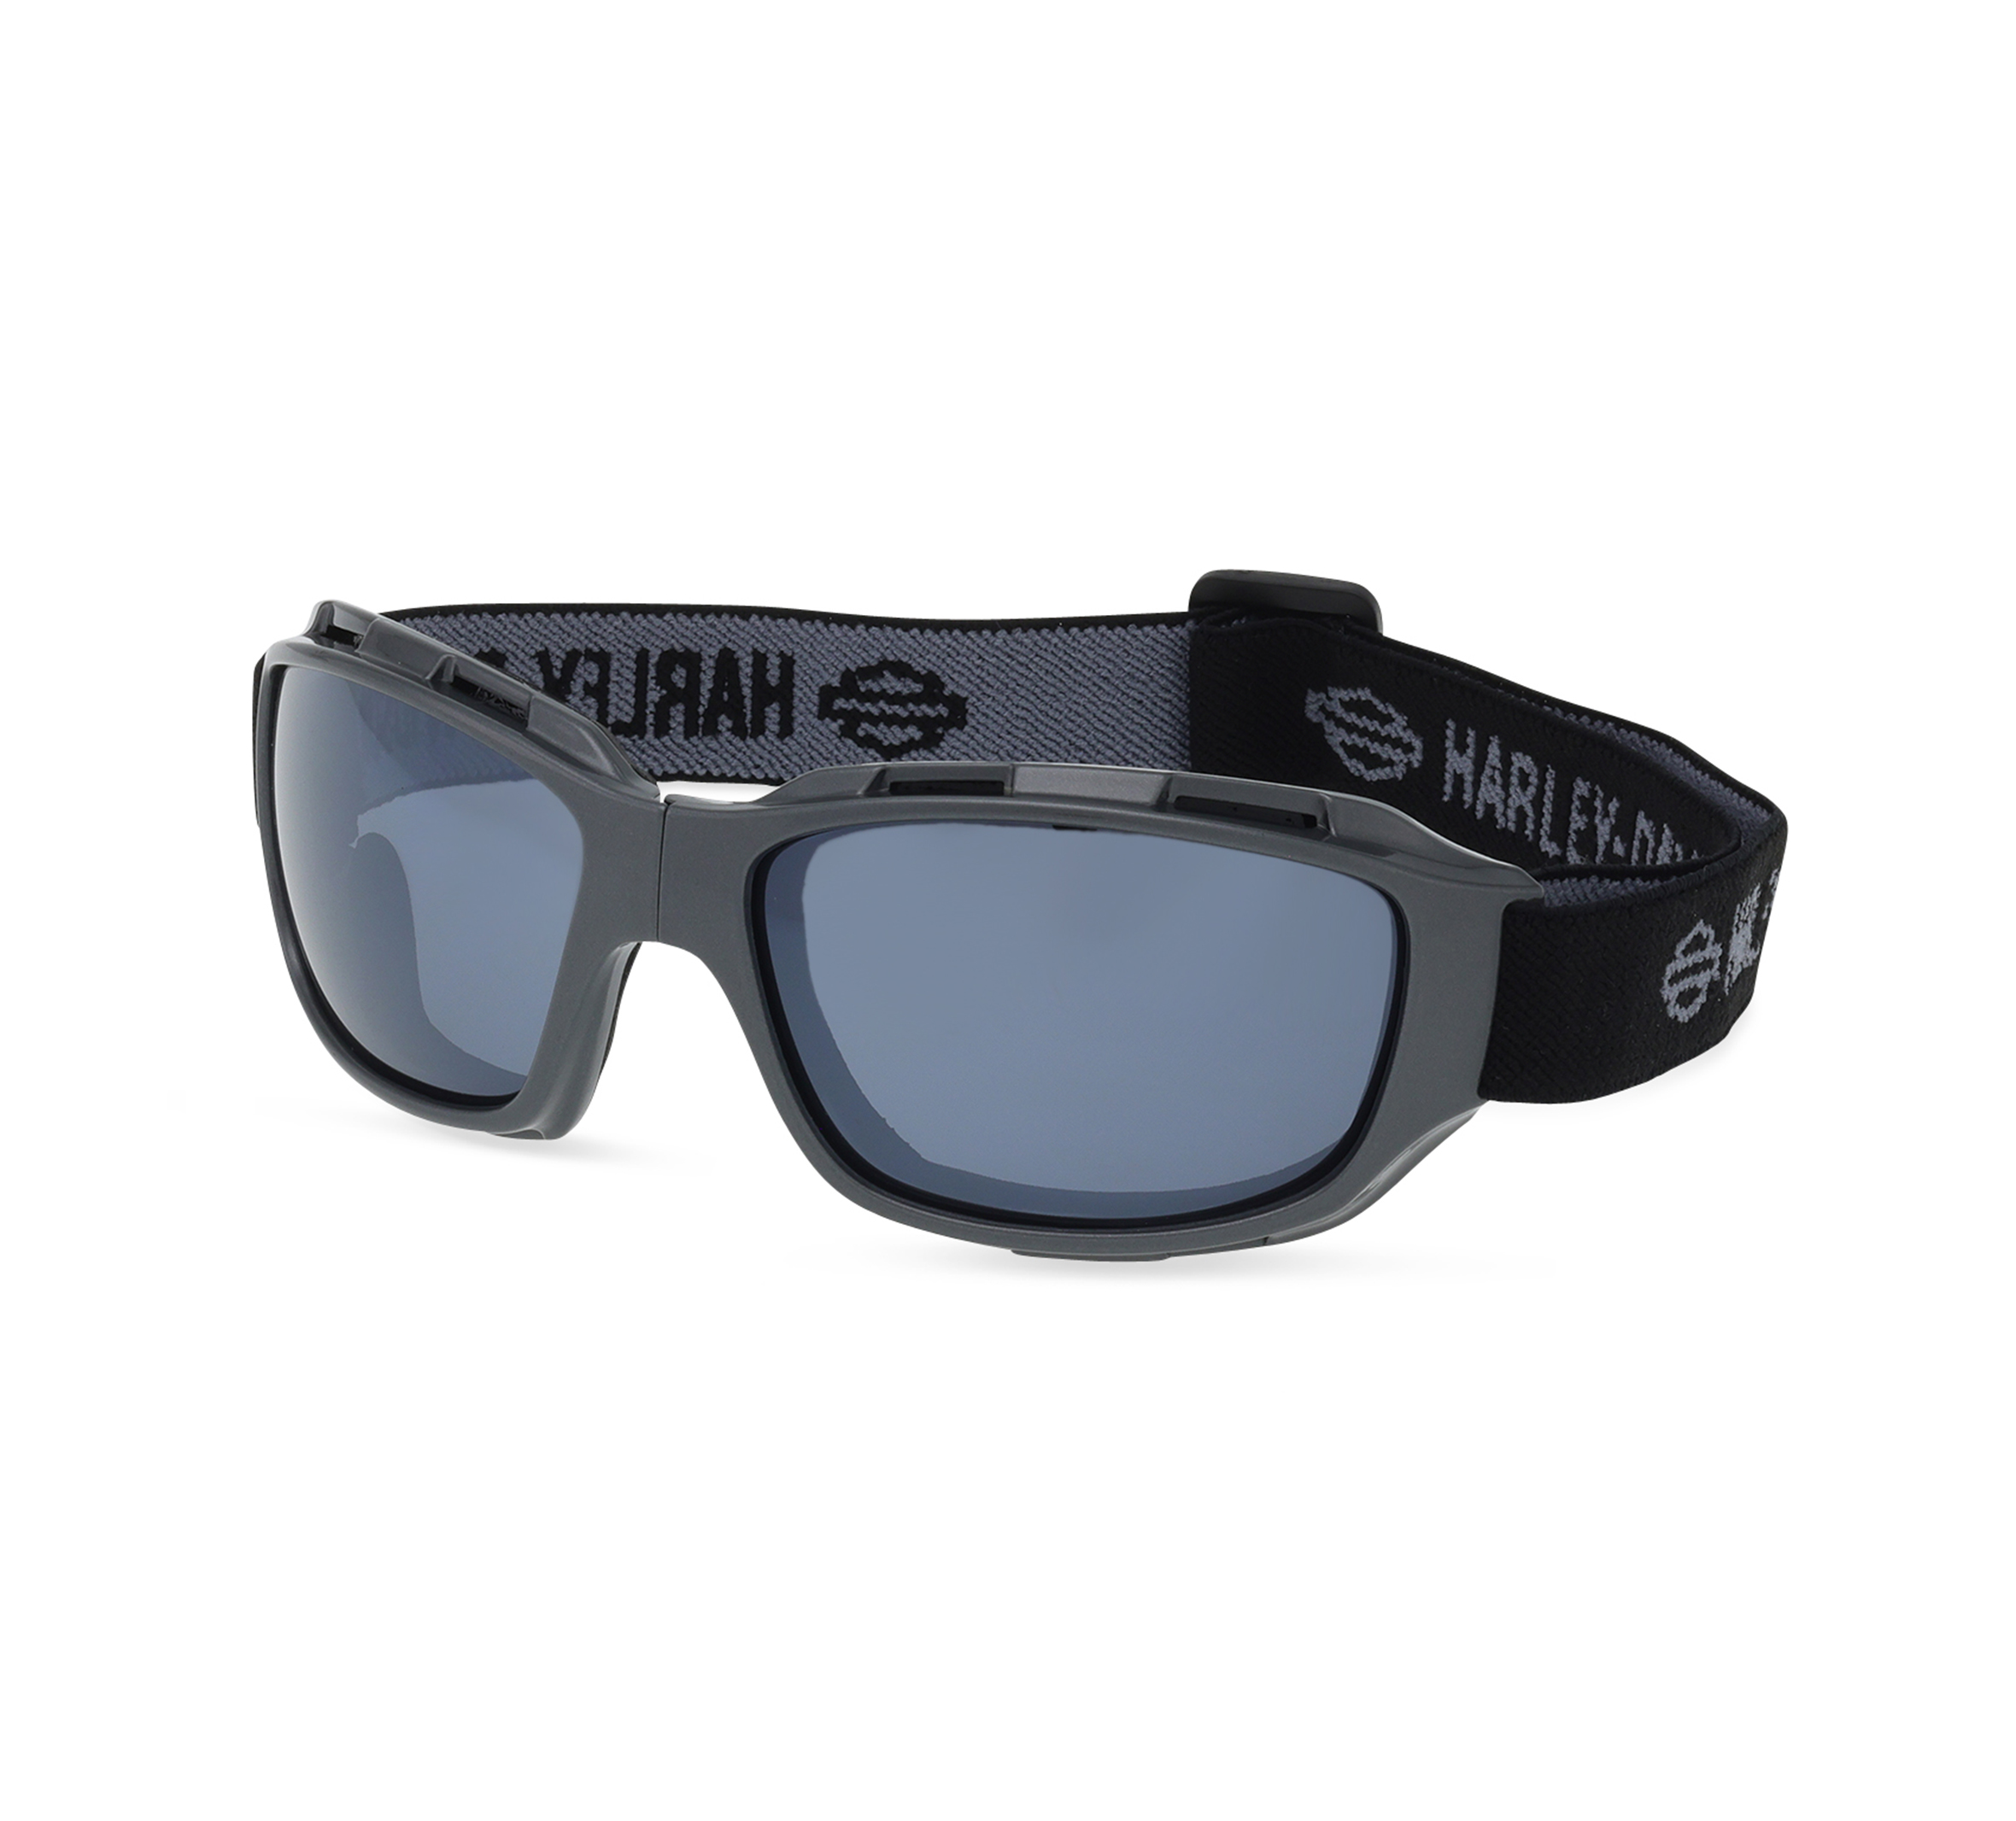 Highway Harley Performance Wrap Sunglasses - Black Olive